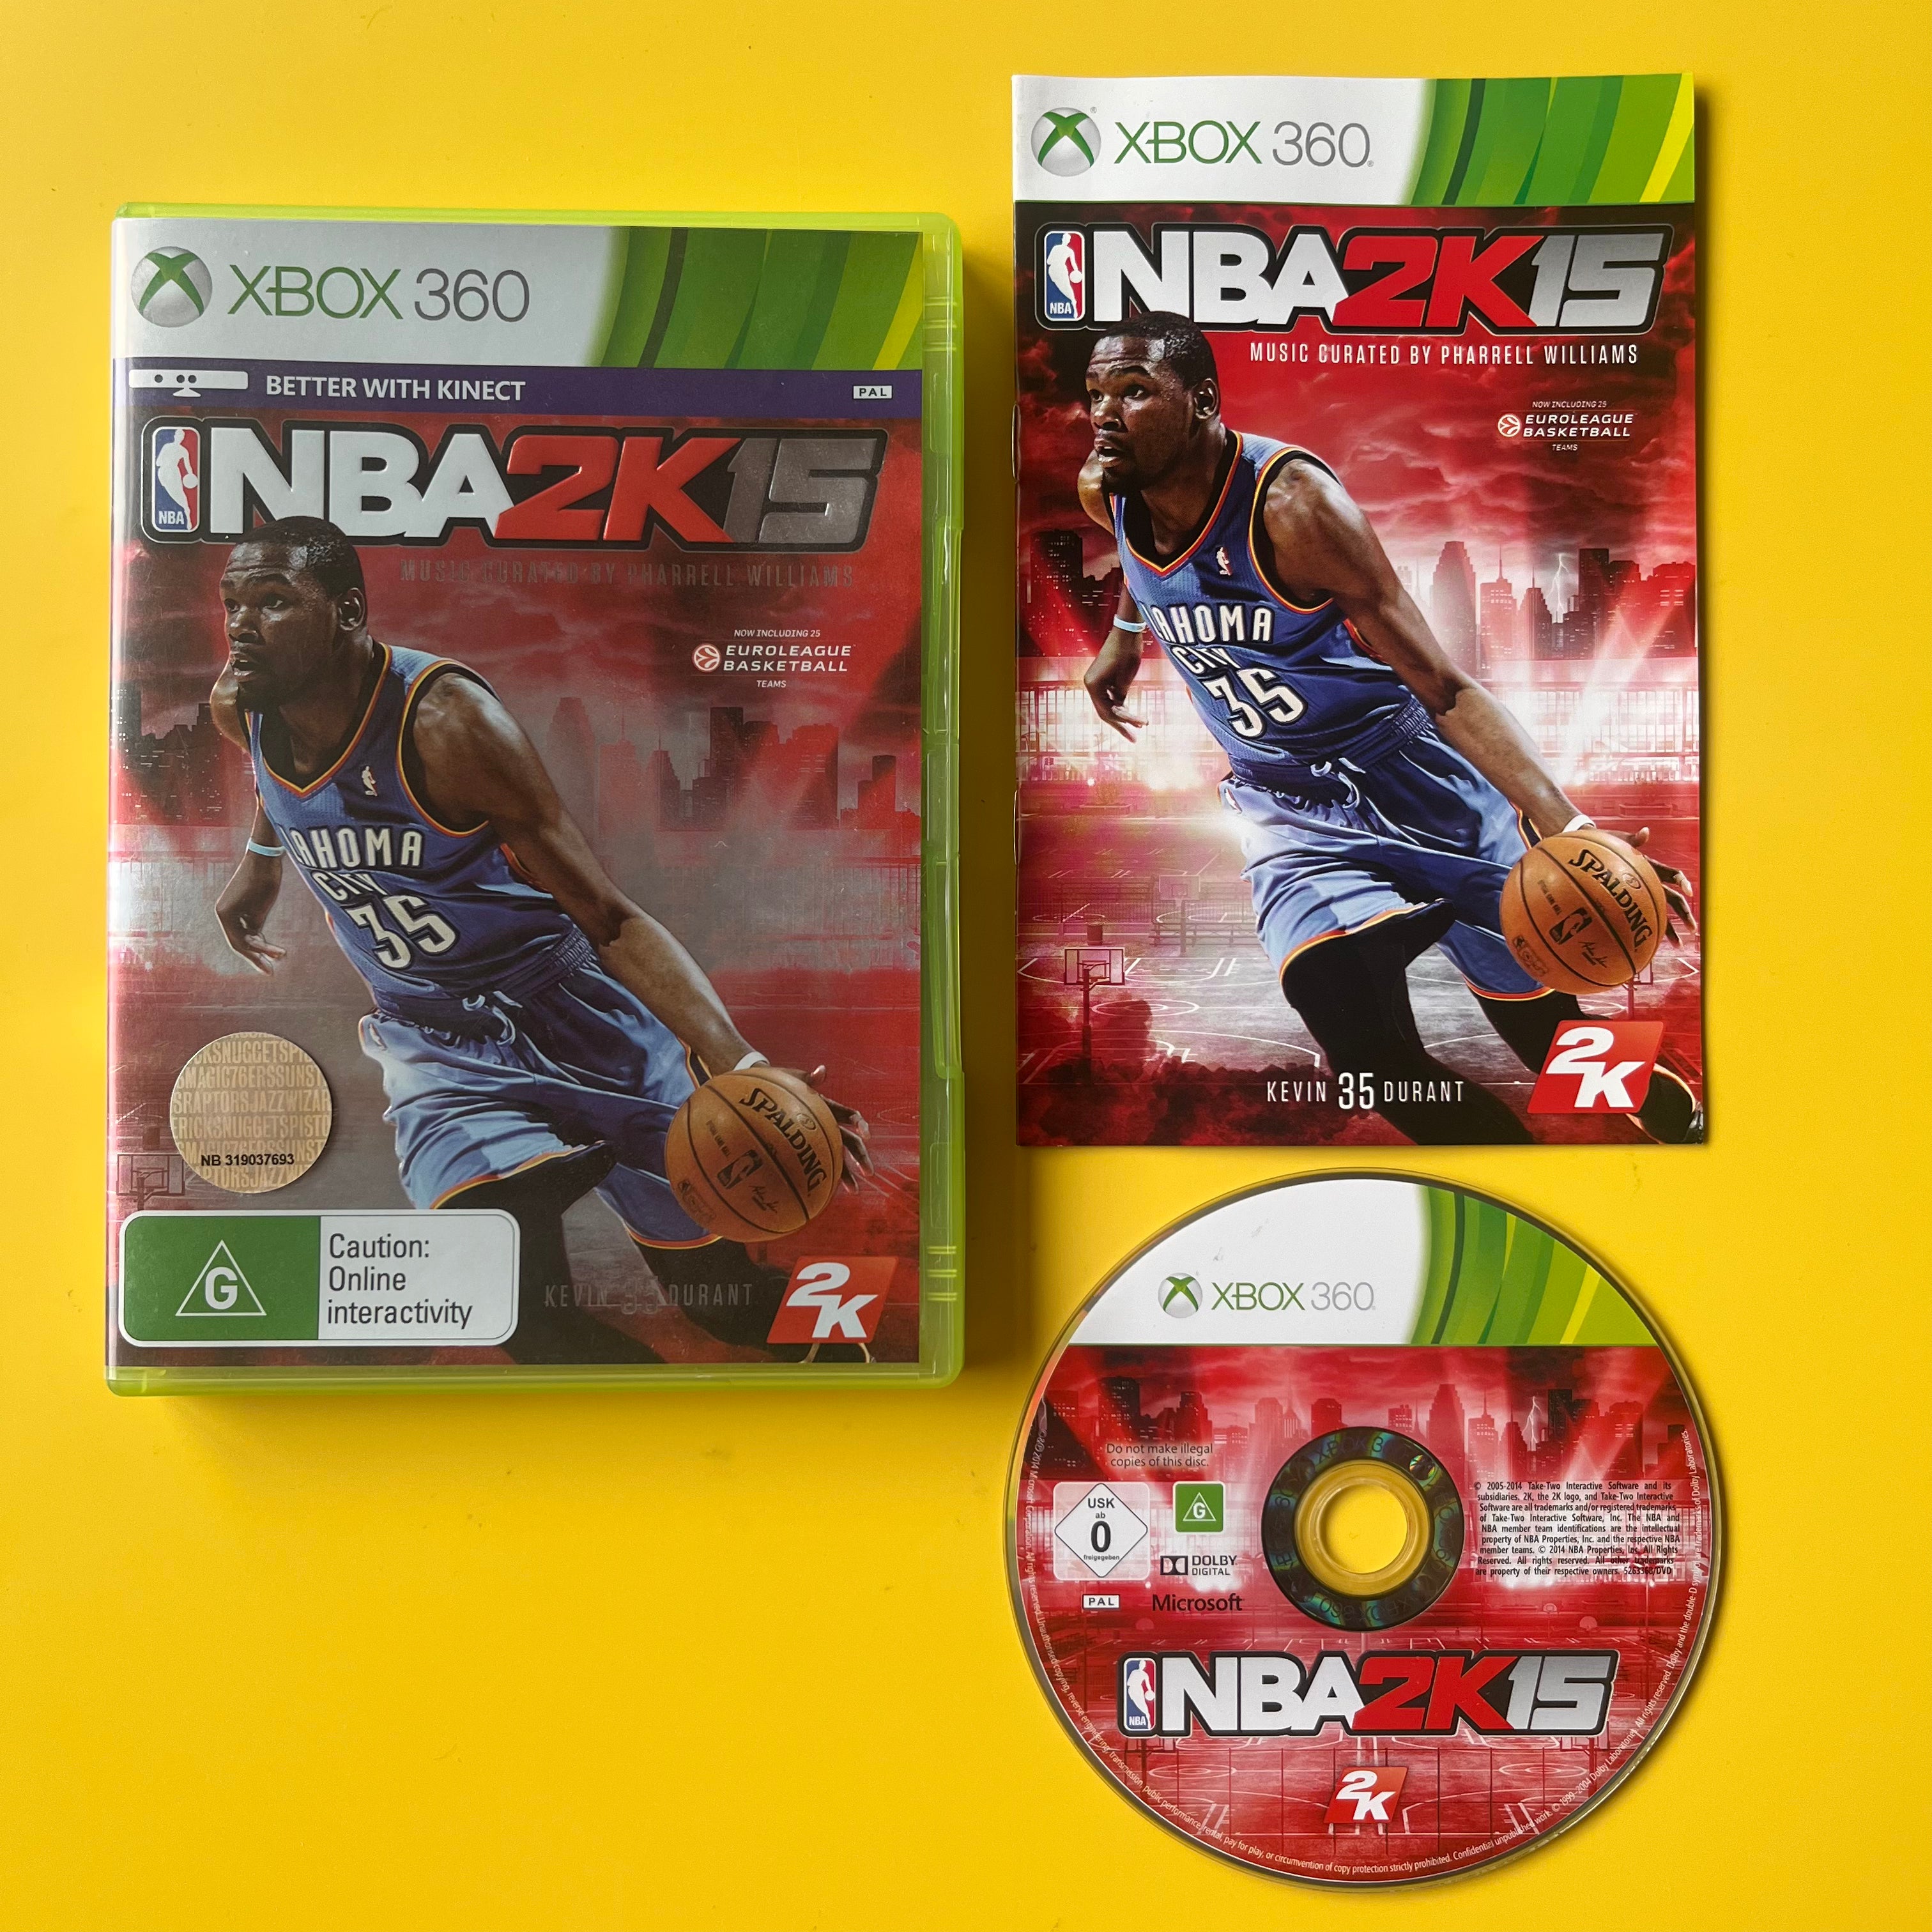 Xbox 360 - NBA 2k15